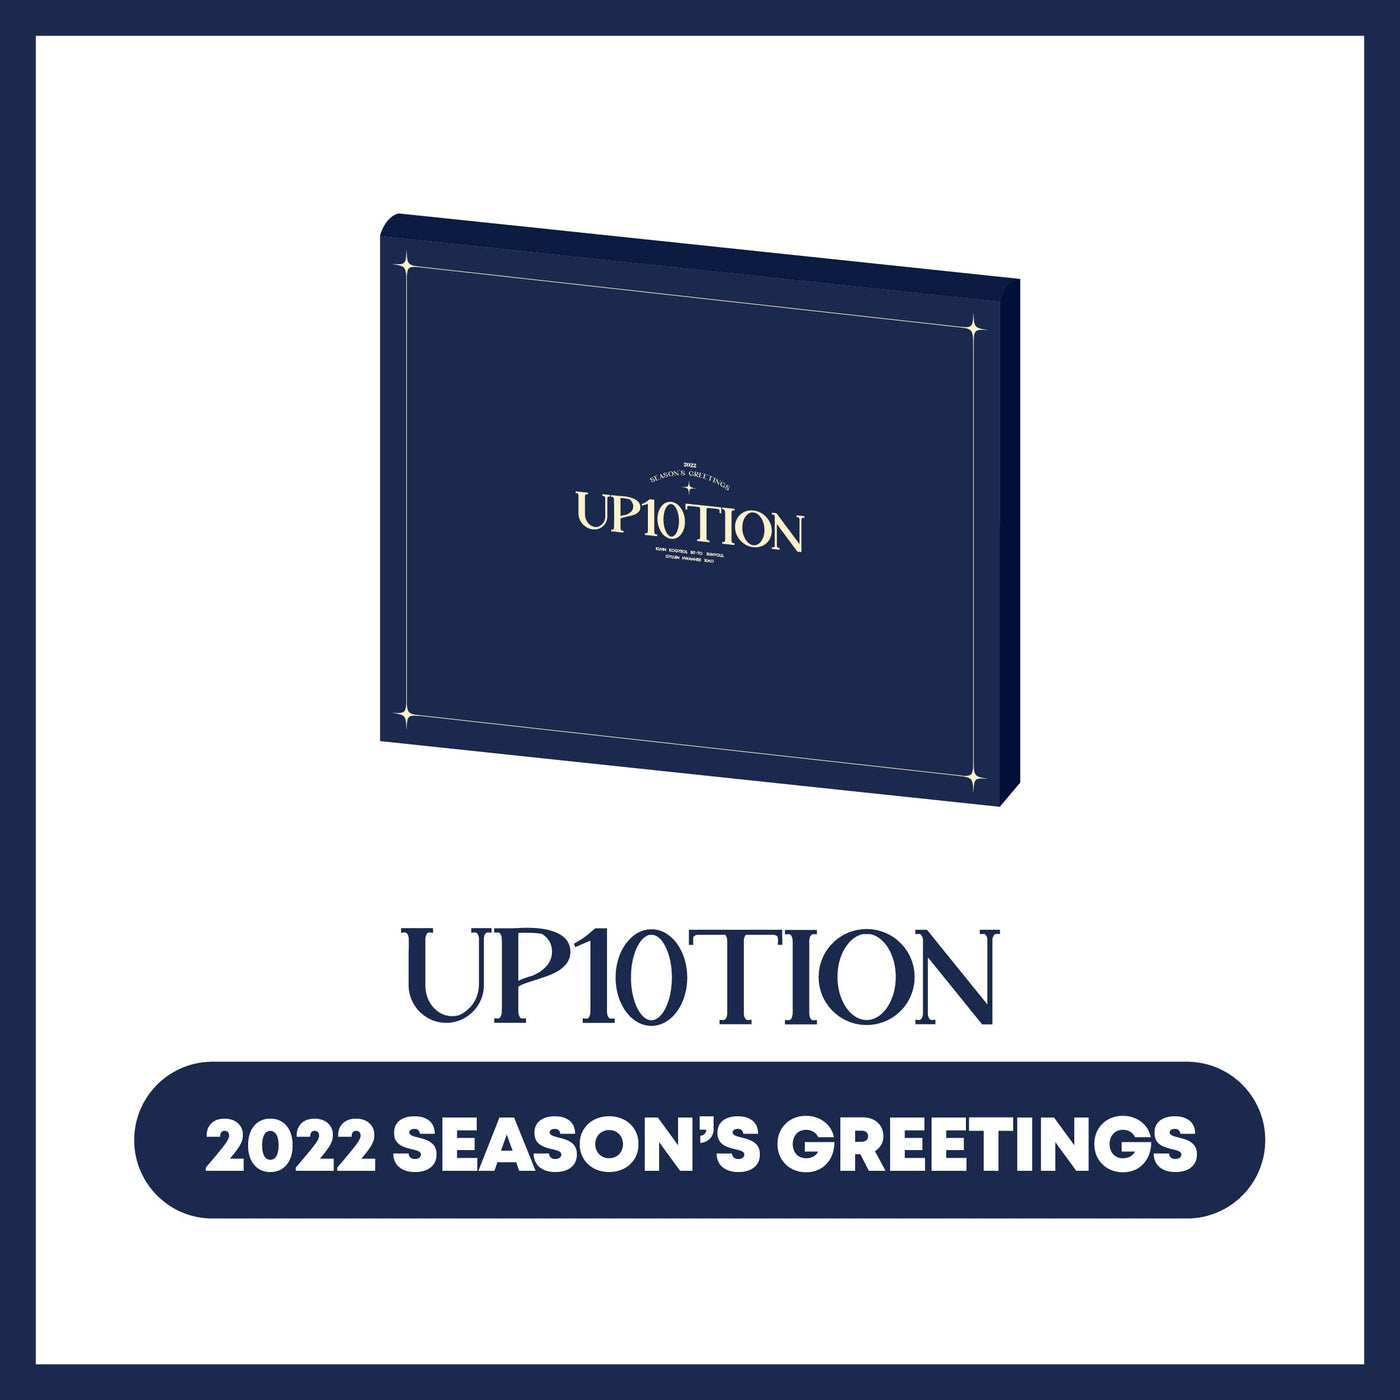 UP10TION 2022 SEASON'S GREETINGS 🇰🇷